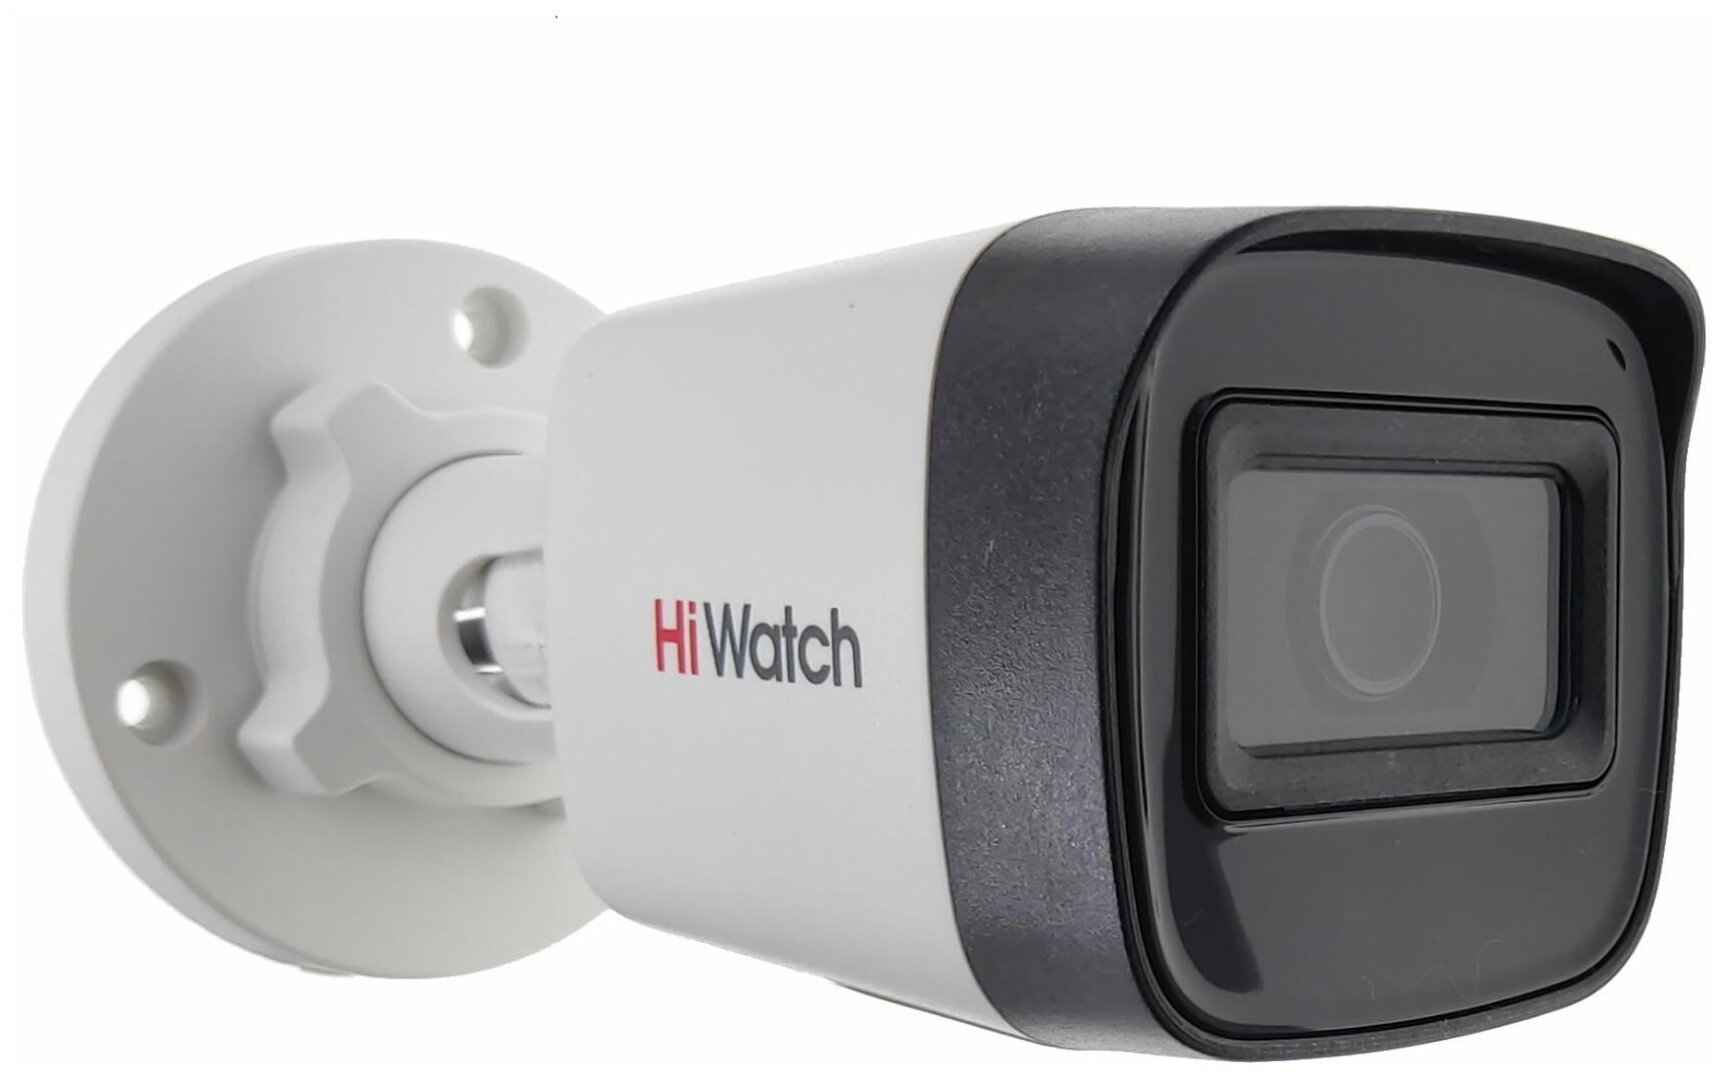 HiWatch HDC-B020(B) уличная камера для видеонаблюдения 2Мп с EXIR подсветкой до 20м формат HD-TVI AHD CVI CVBS